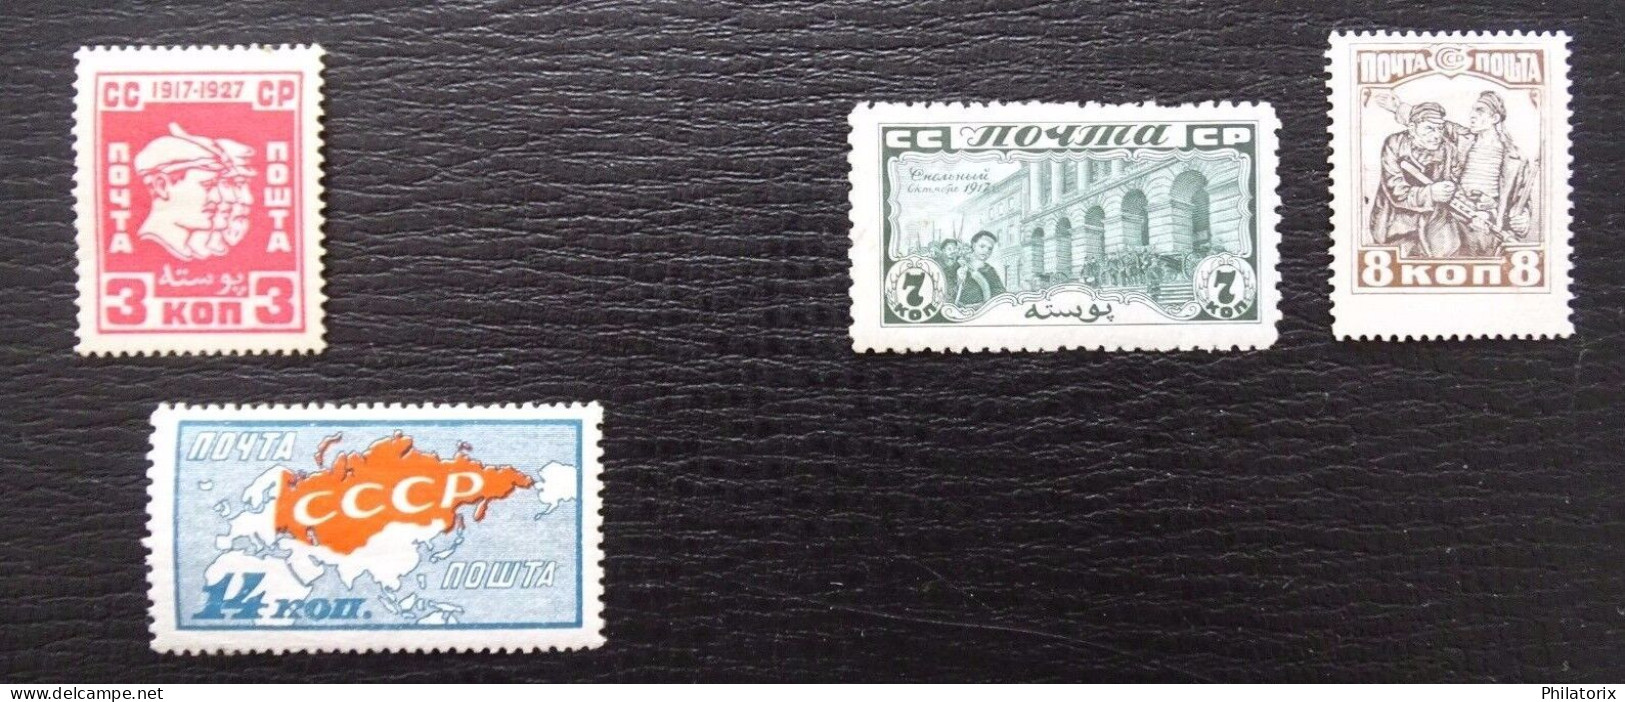 Sowjetunion Mi 328-334 * , Sc 375-381 MH , Jahrestag Revolution , Unvollständig/Incomplete - Unused Stamps